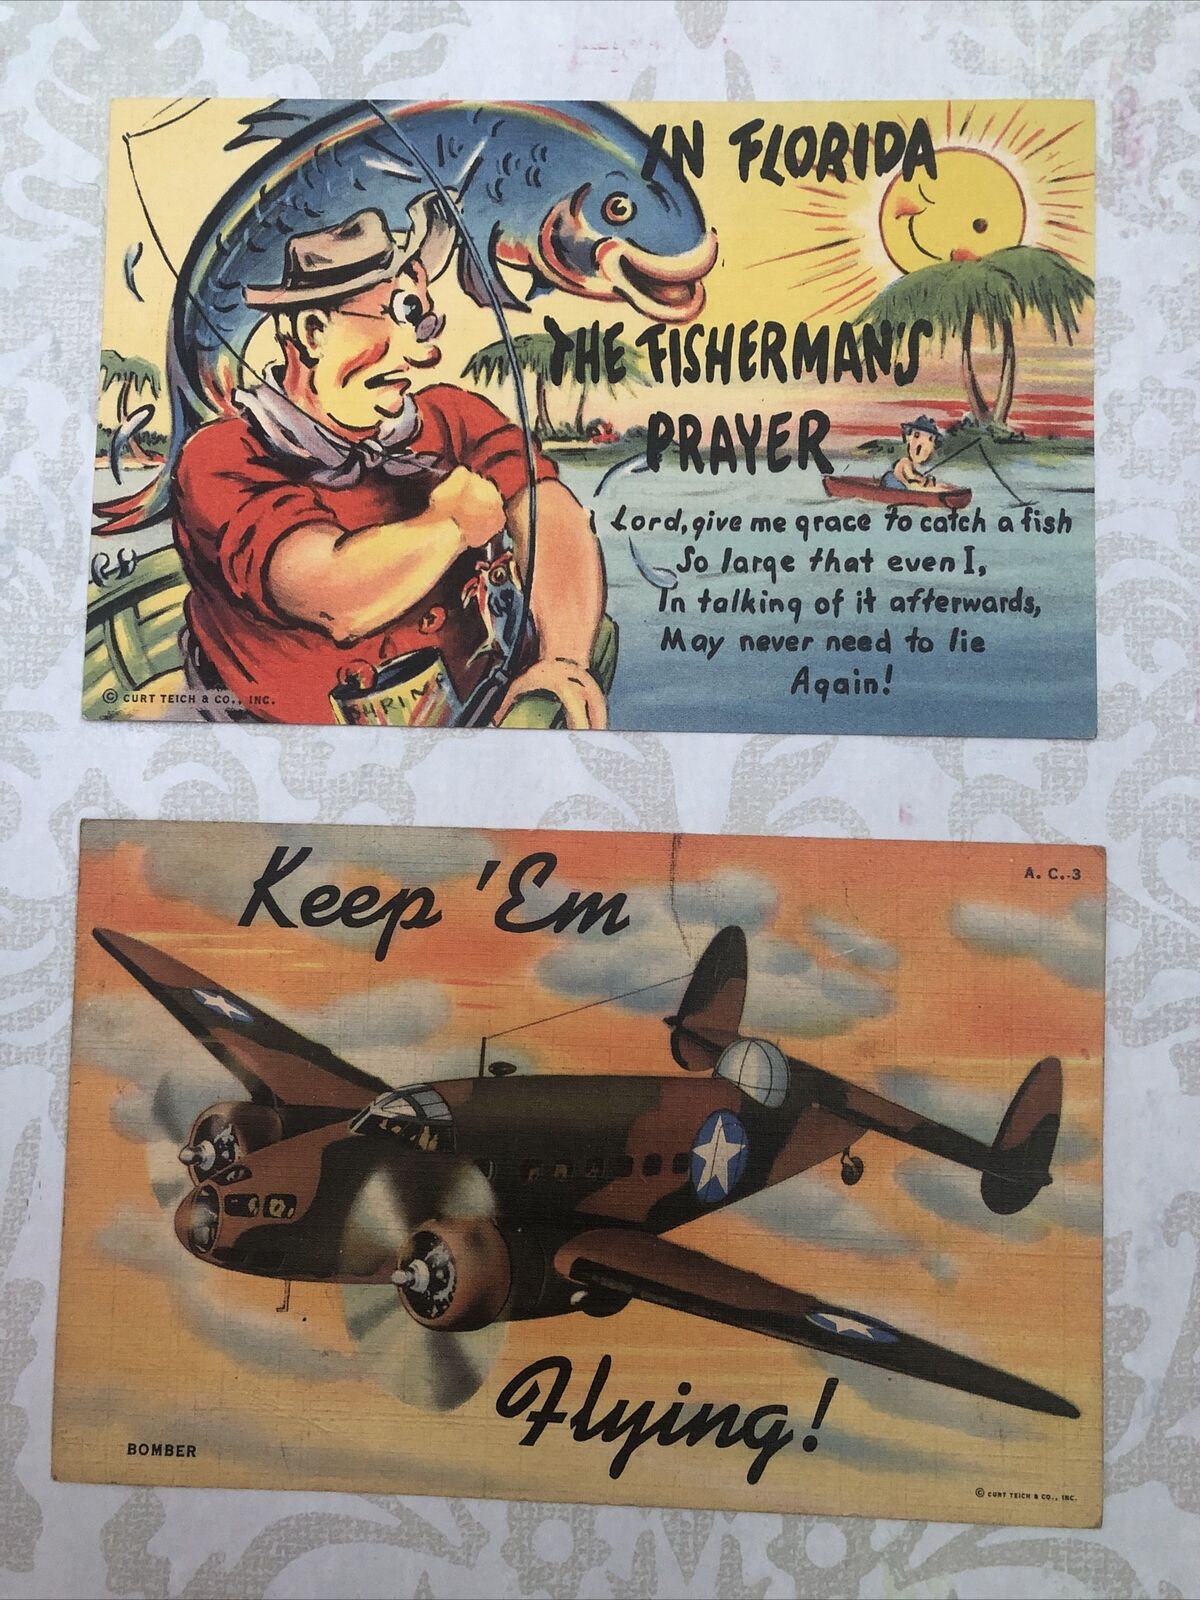 Set Of 2 Antique Florida Postcards